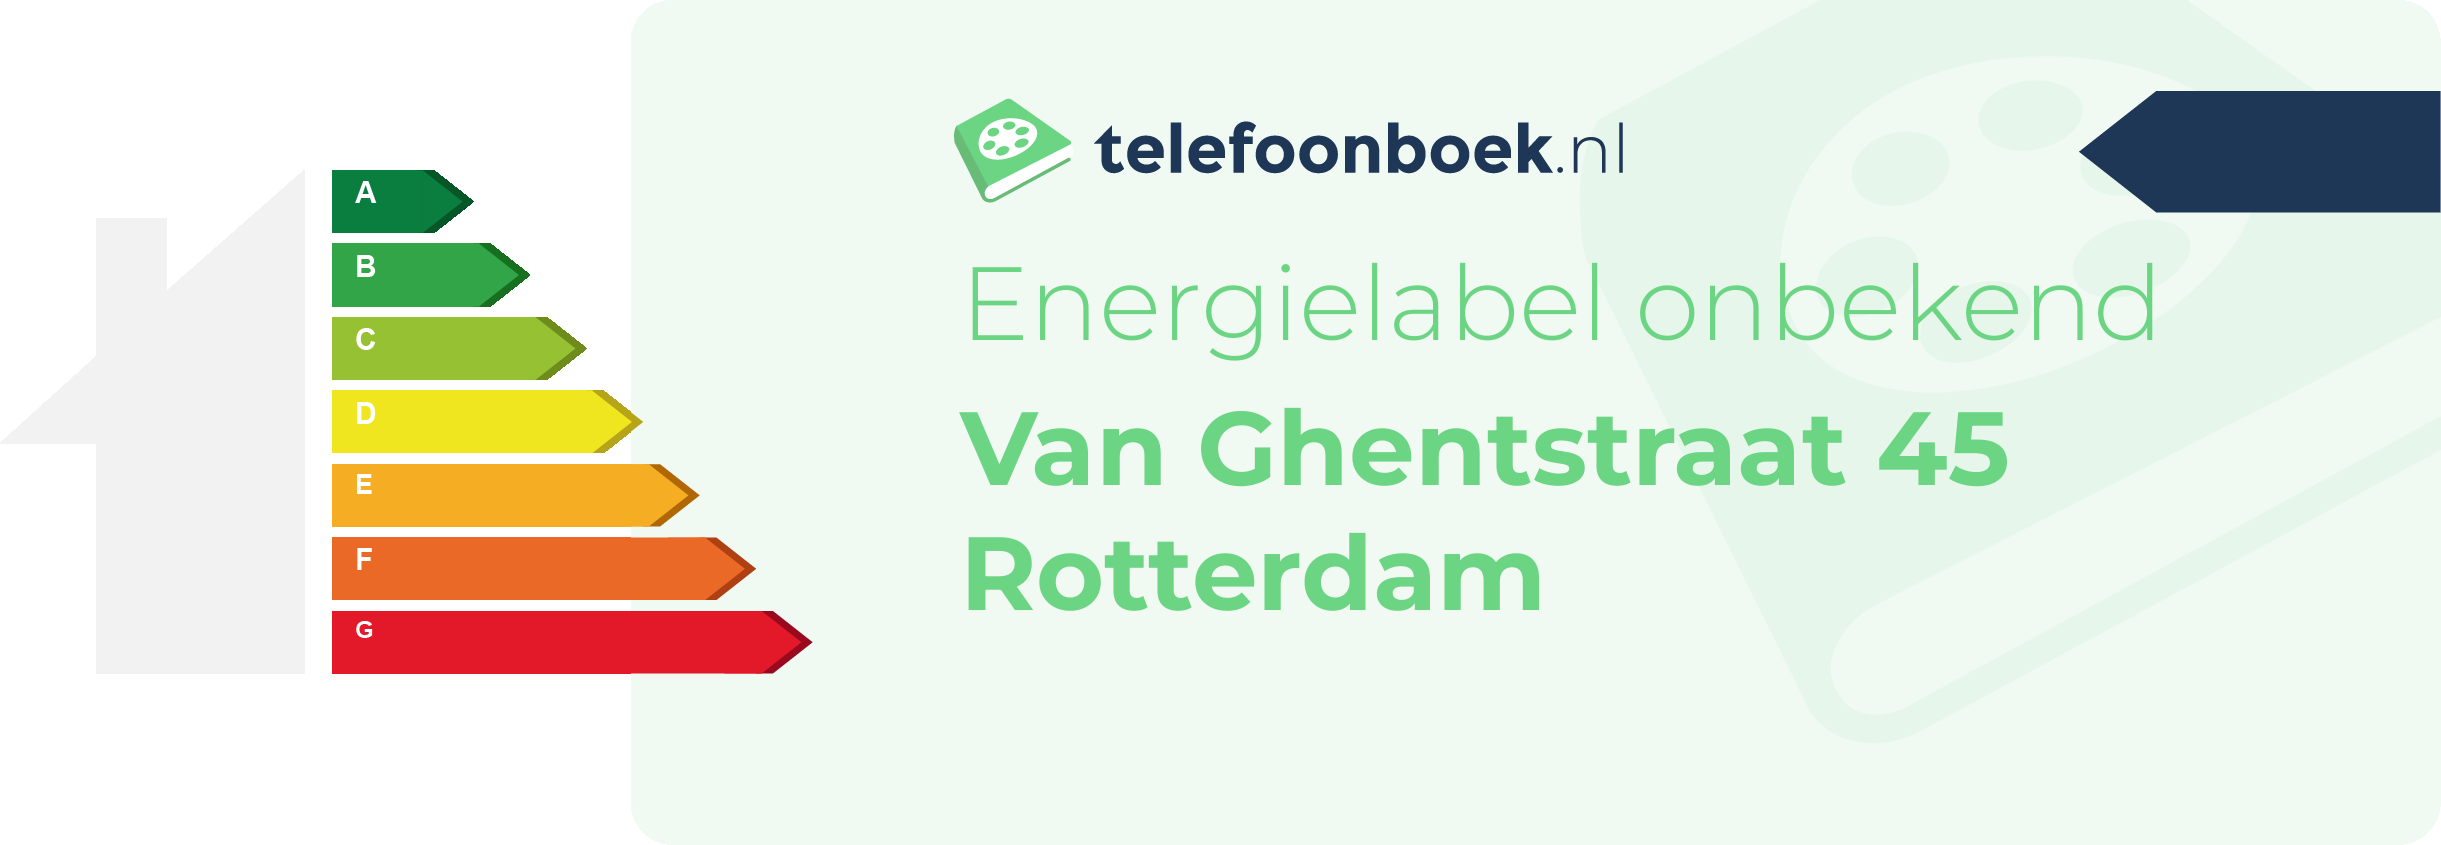 Energielabel Van Ghentstraat 45 Rotterdam